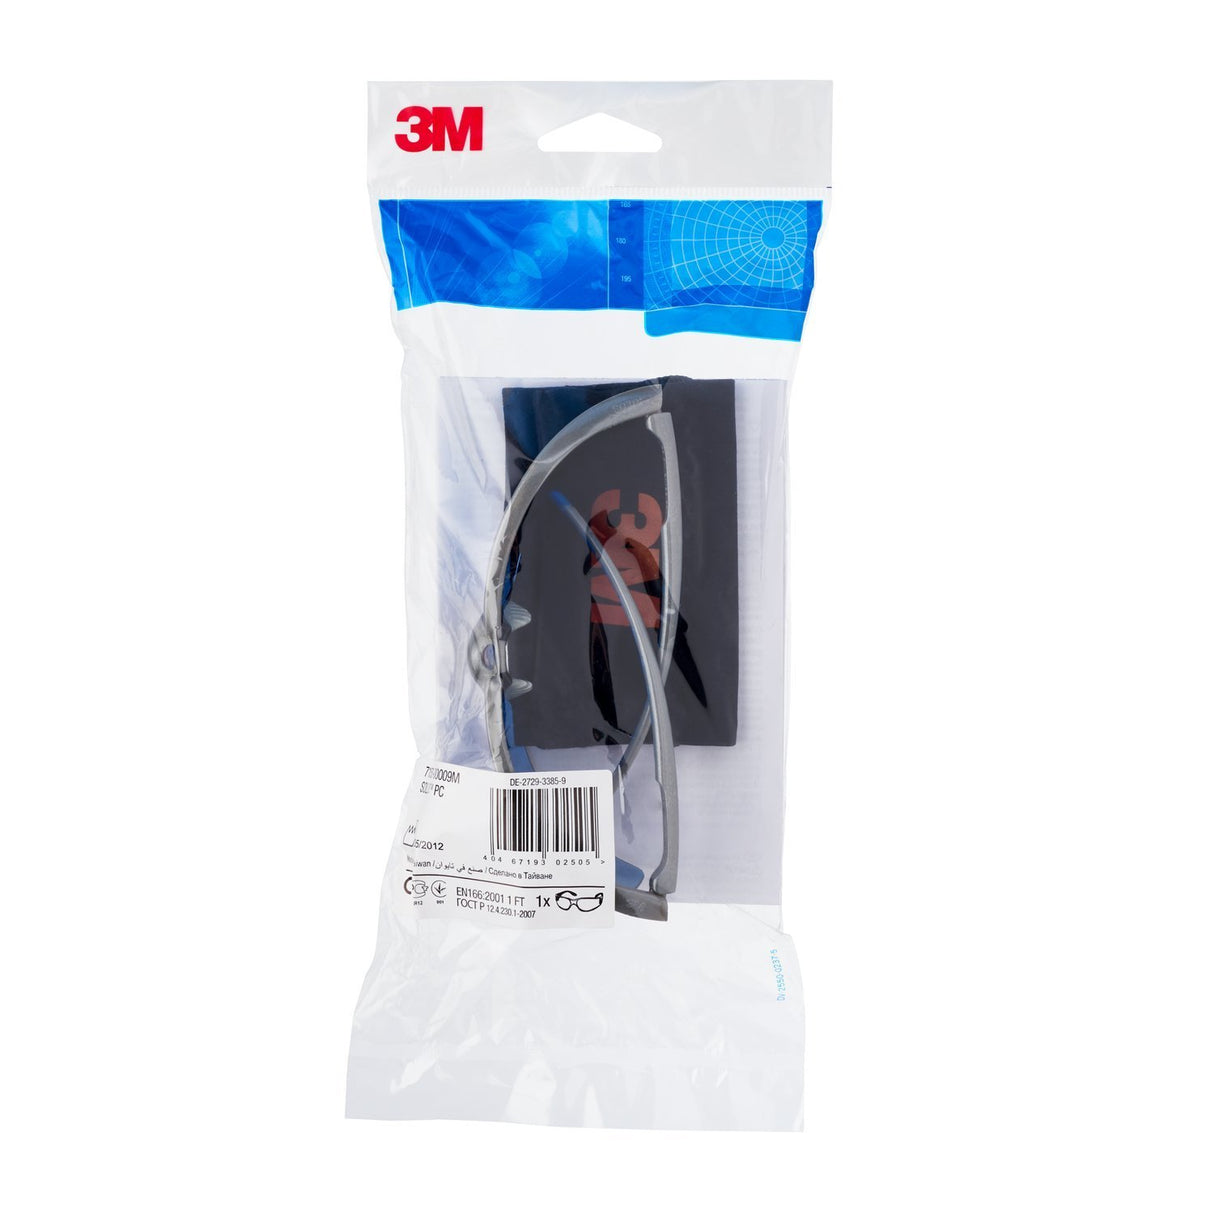 3M Solus 71505-00009 Blue Anti-Scratch Mirror Lens Safety Glasses